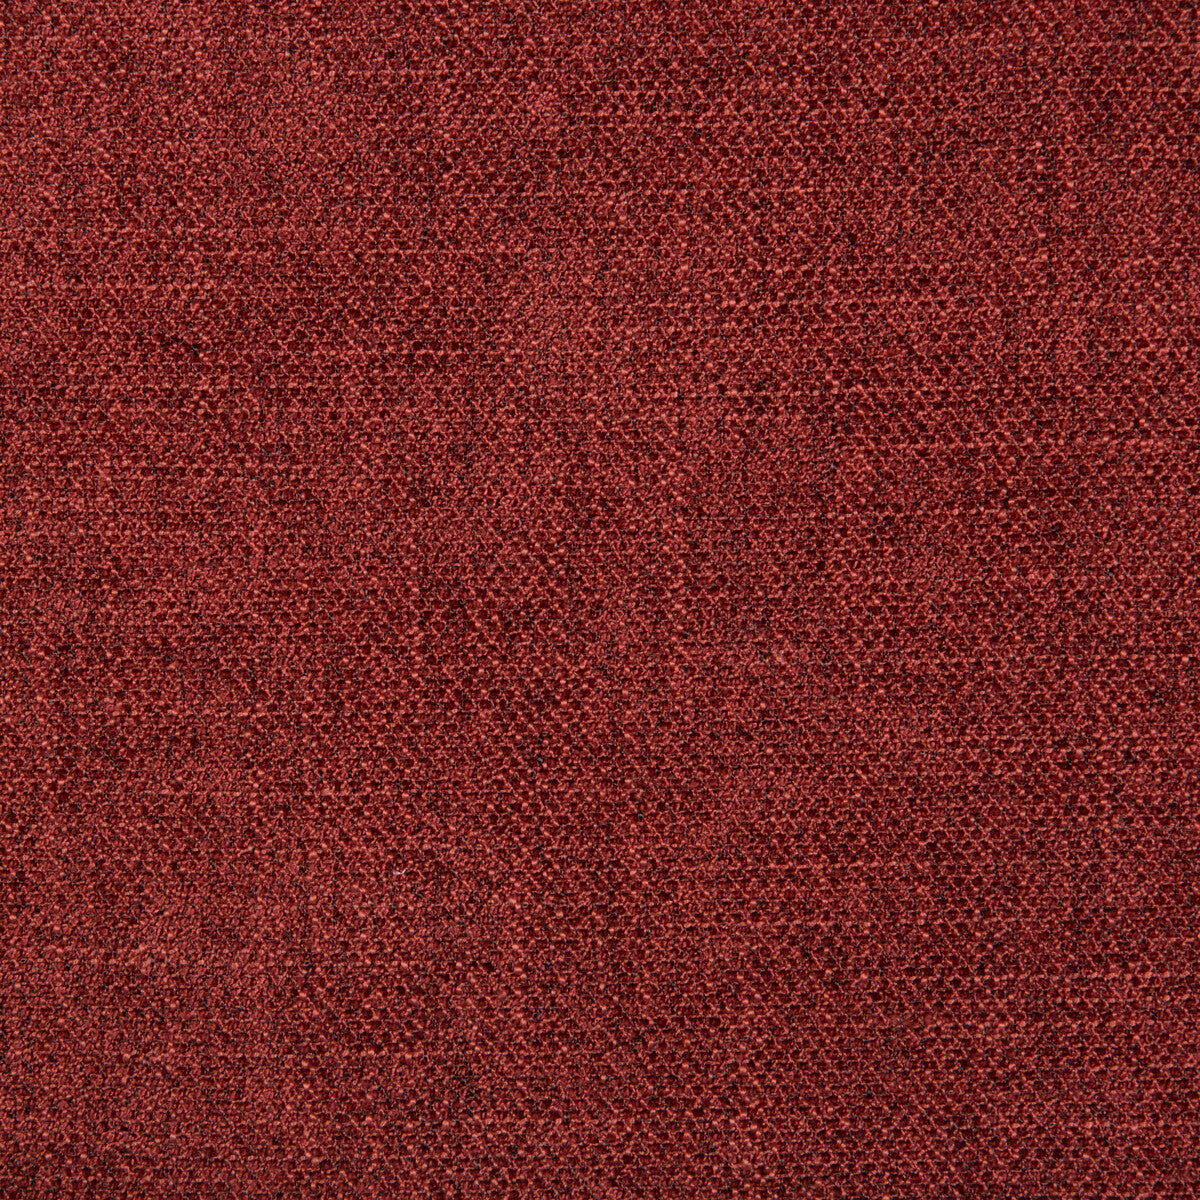 Kf Smt fabric - pattern 35060.24.0 - by Kravet Smart in the Performance Kravetarmor collection